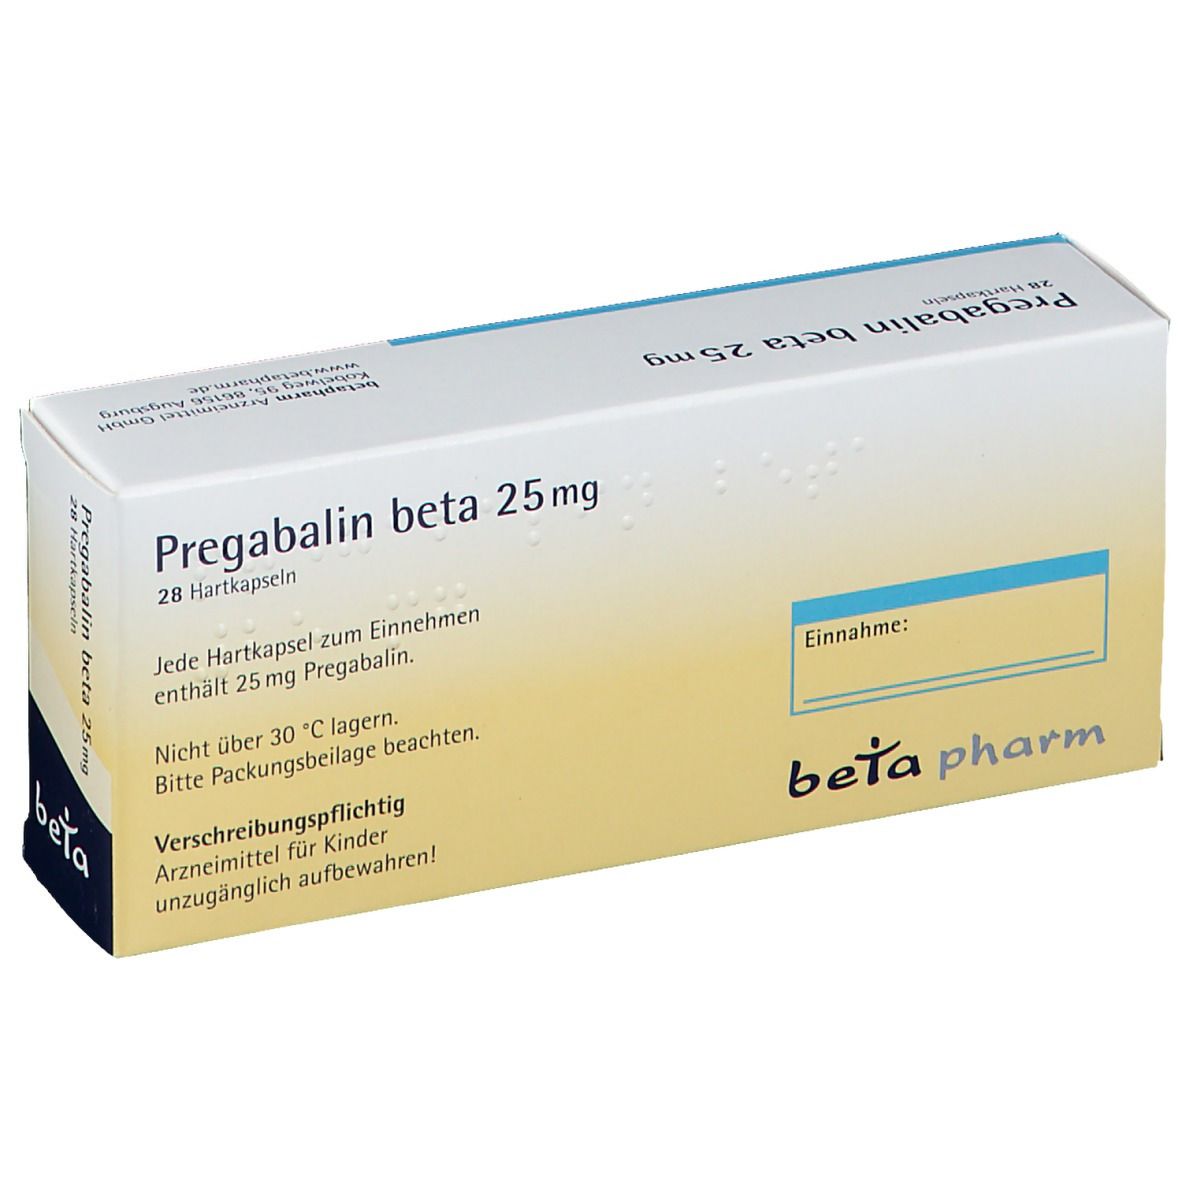 PREGABALIN beta 25 mg Hartkapseln